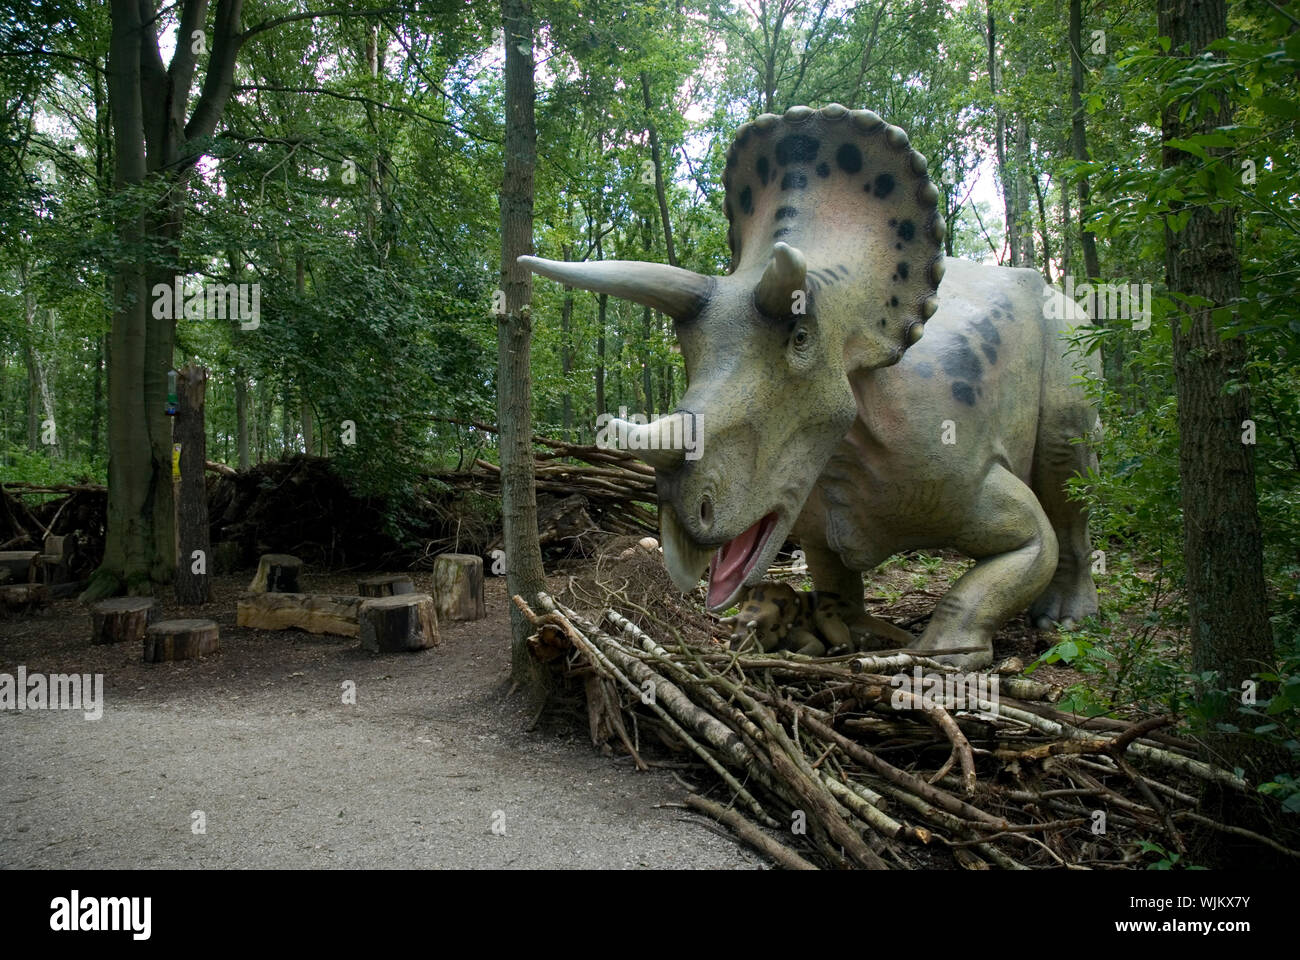 Eating prehistoric dinosaur in the forest Stock Photo